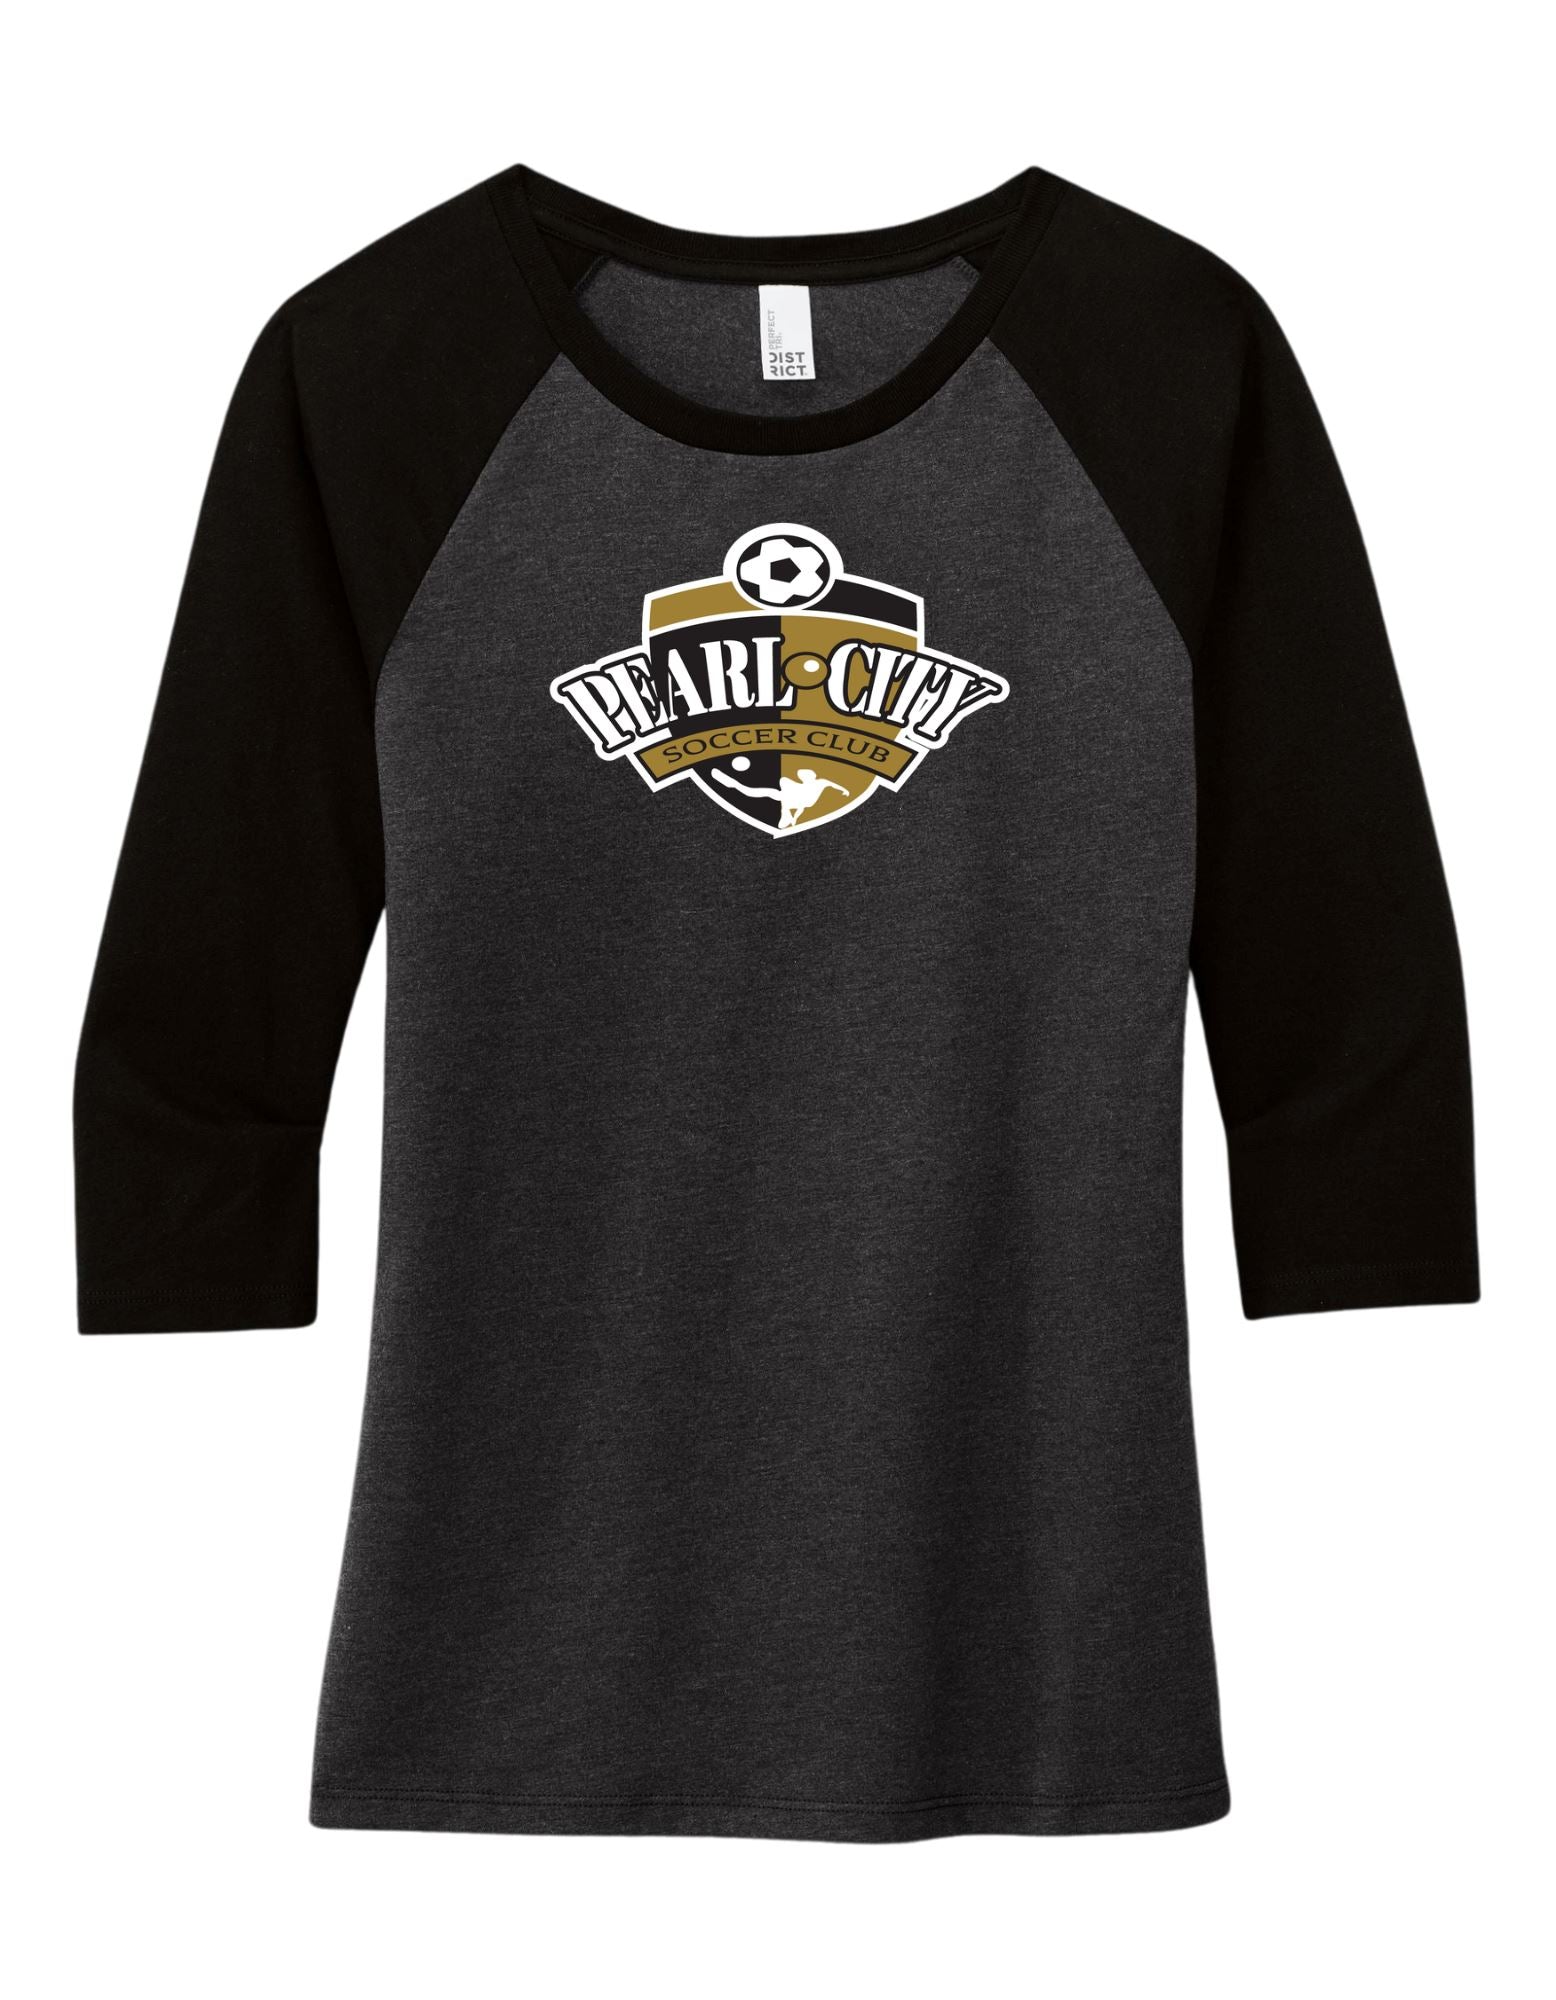 Pearl City Soccer Club Women's 3/4-Sleeve Shirt Goal Kick Soccer X-Small Black/Black Frost 